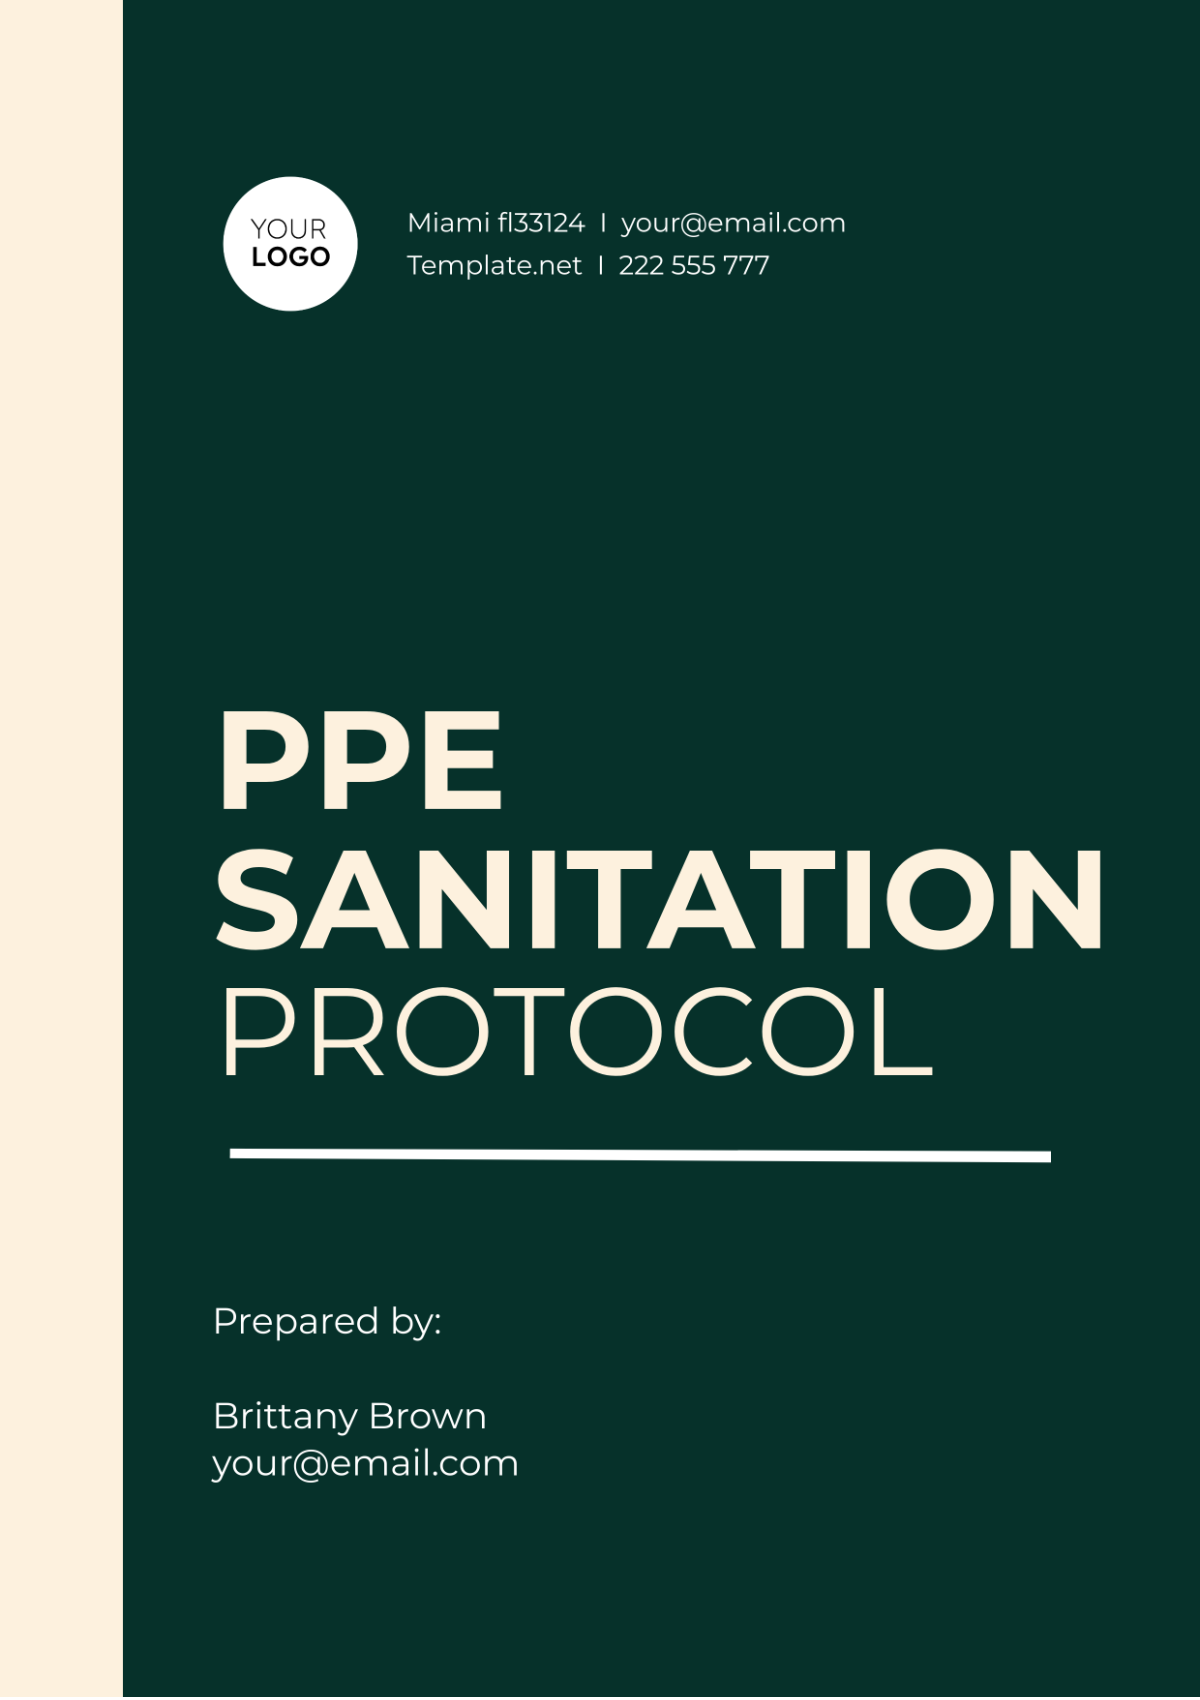 PPE Sanitation Protocol Template